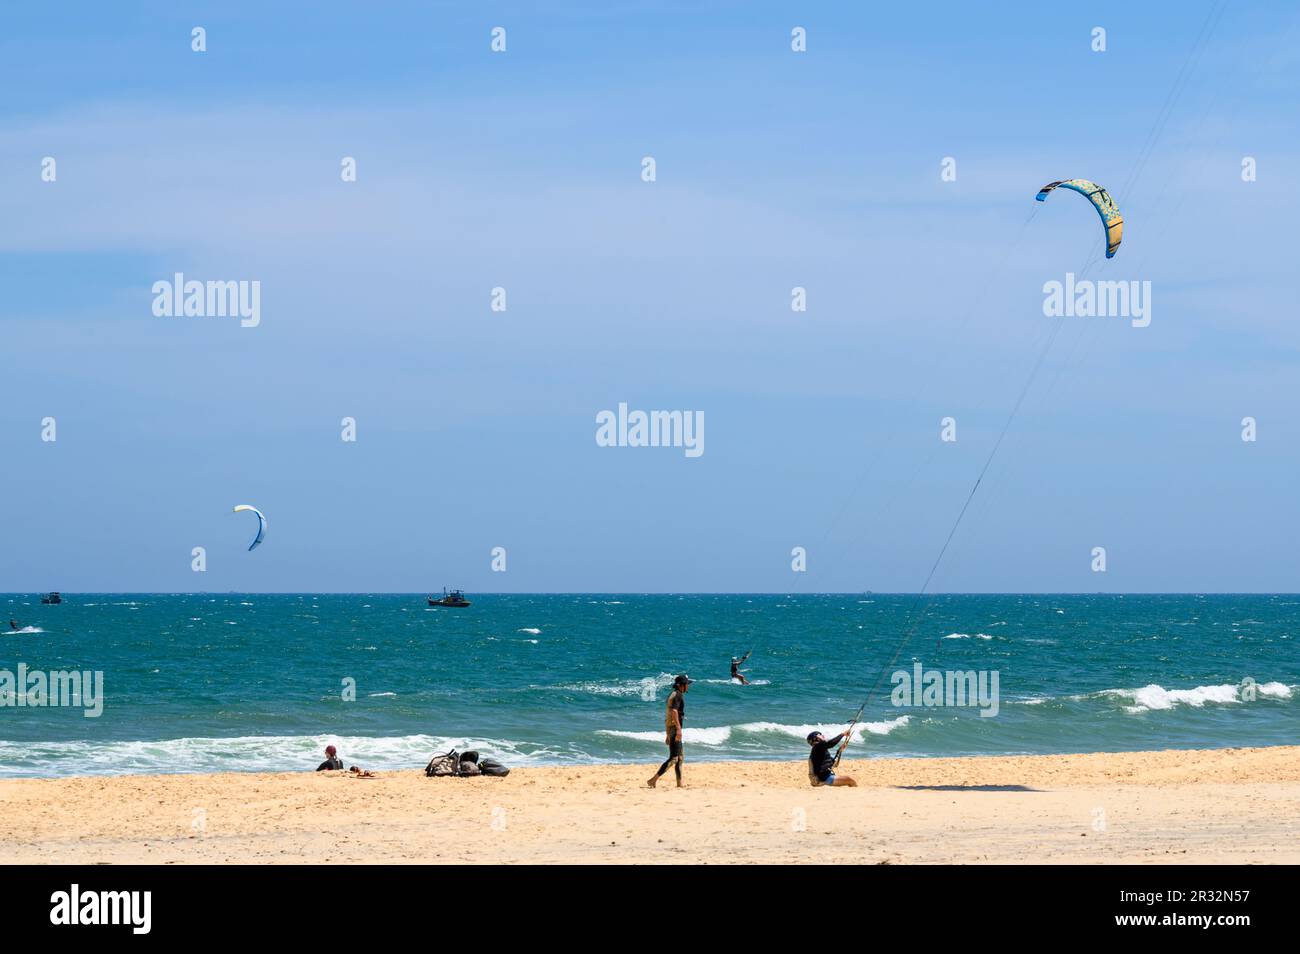 Kitesurfers in action on and off the fine, sandy beach in Mui Ne, Vietnam. Stock Photo